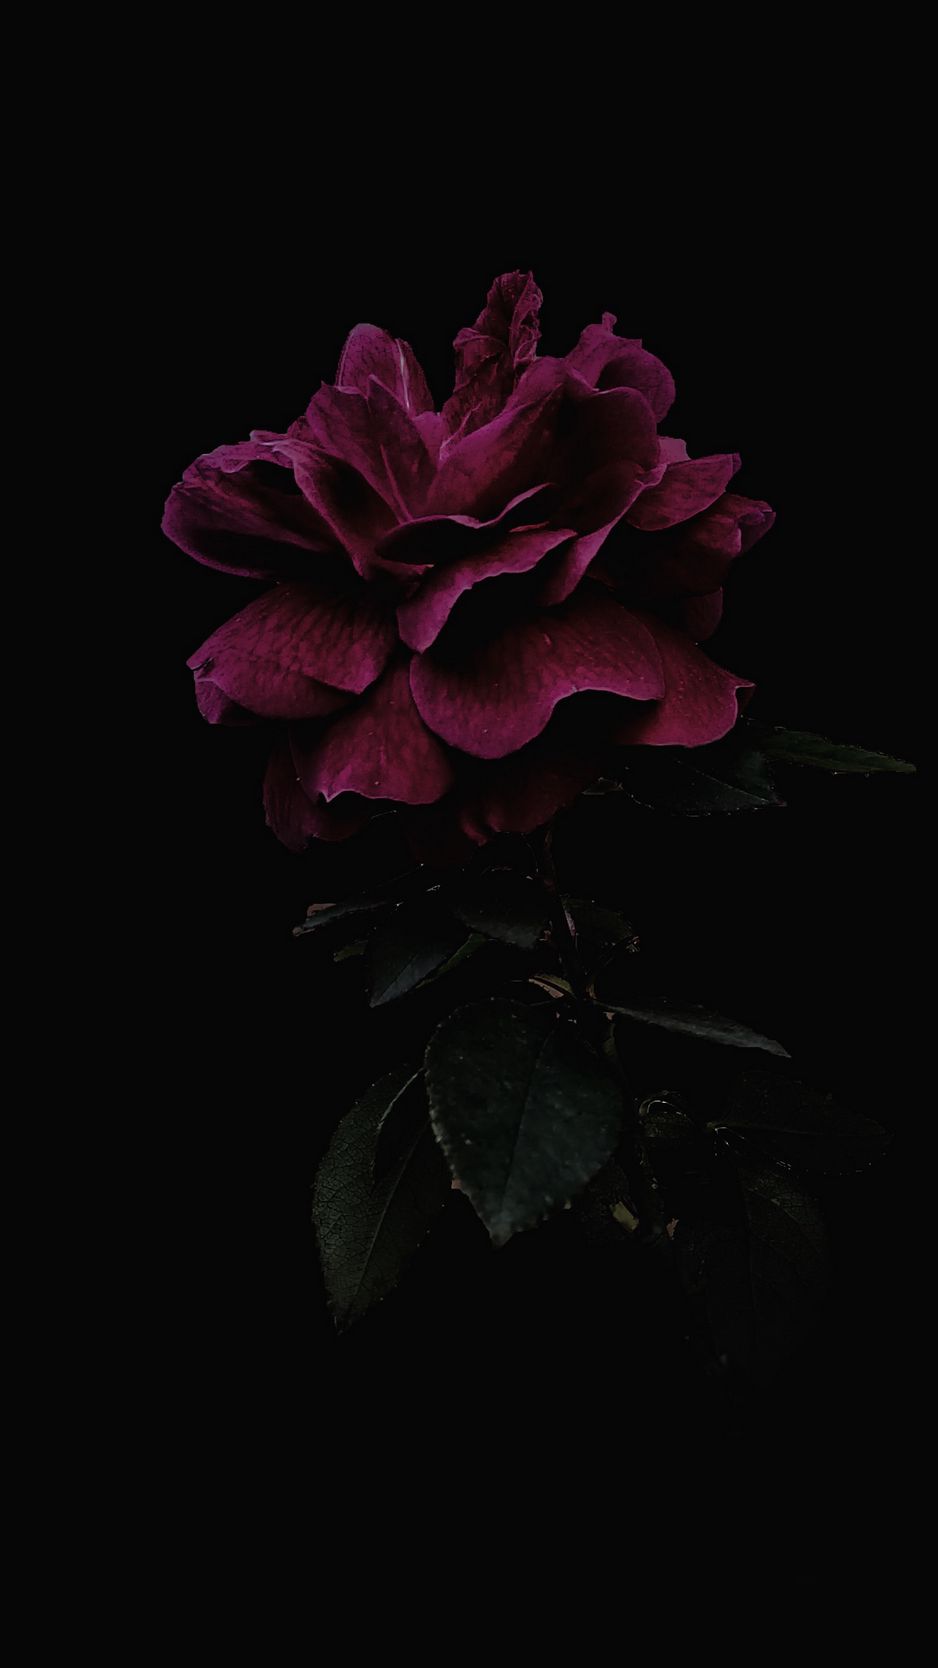 Aesthetic iPhone wallpaper, pink rose | Free Photo - rawpixel